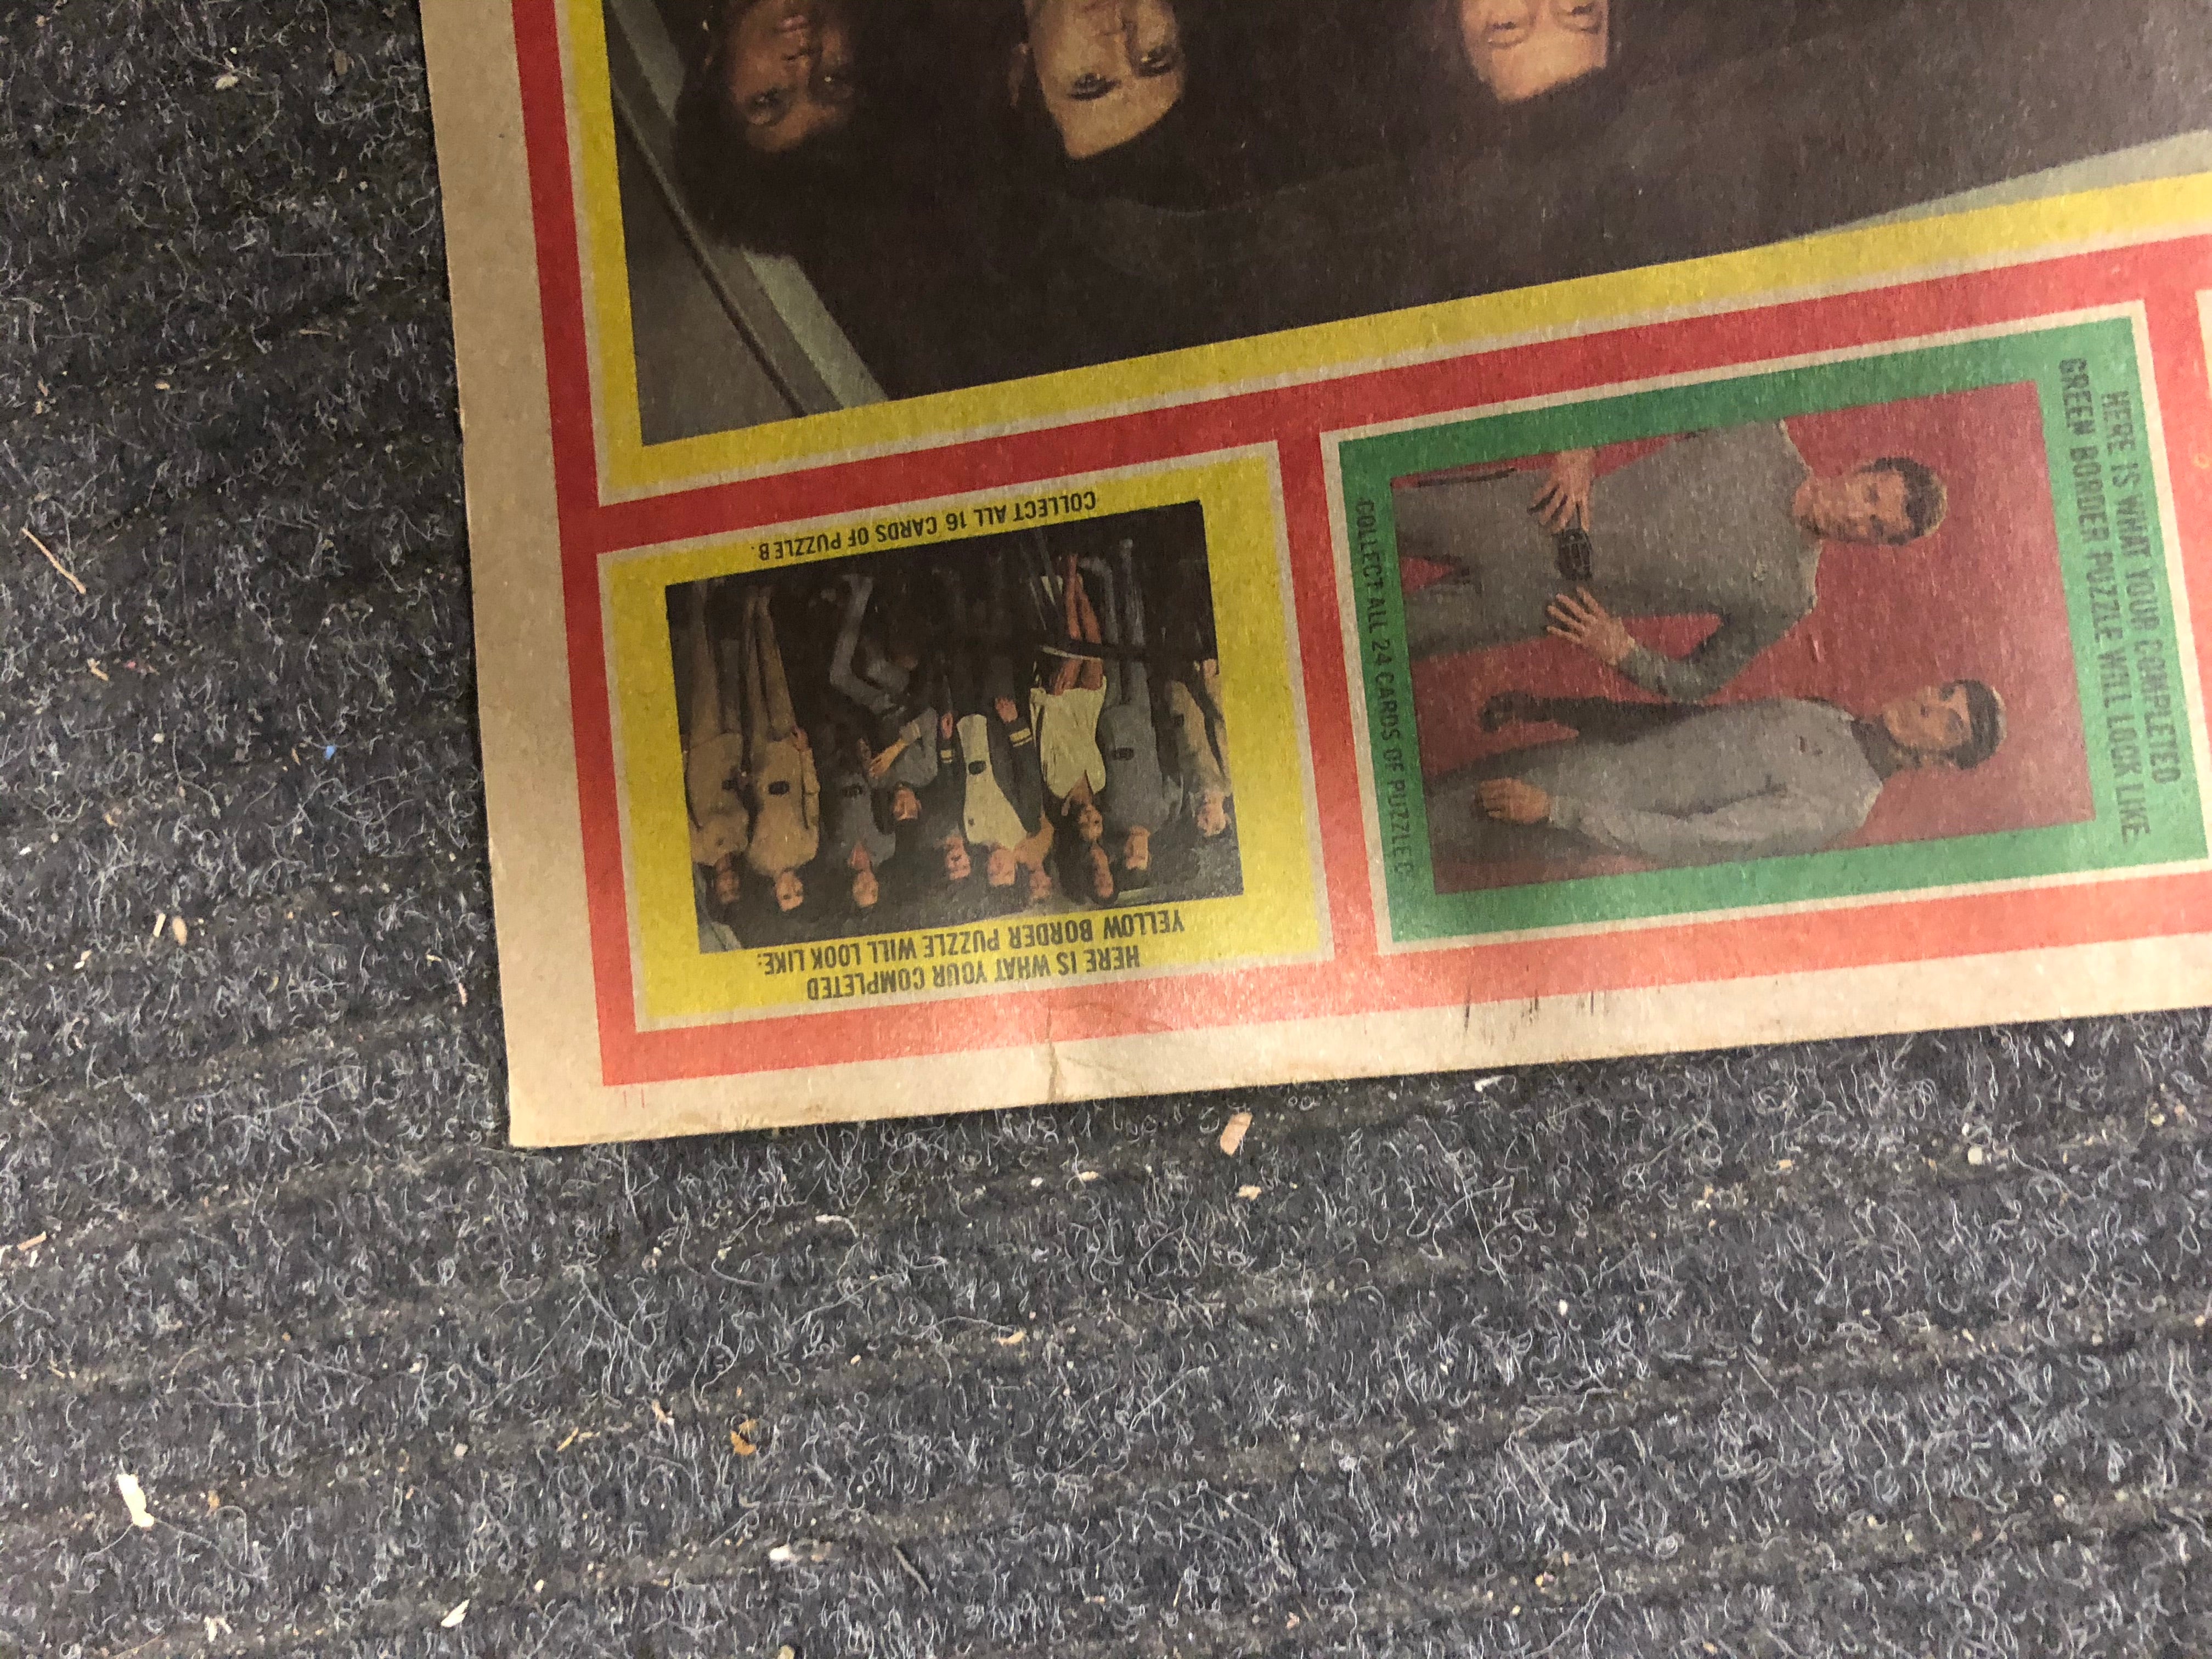 1979 Topps Star Trek movie cards rare uncut sheet